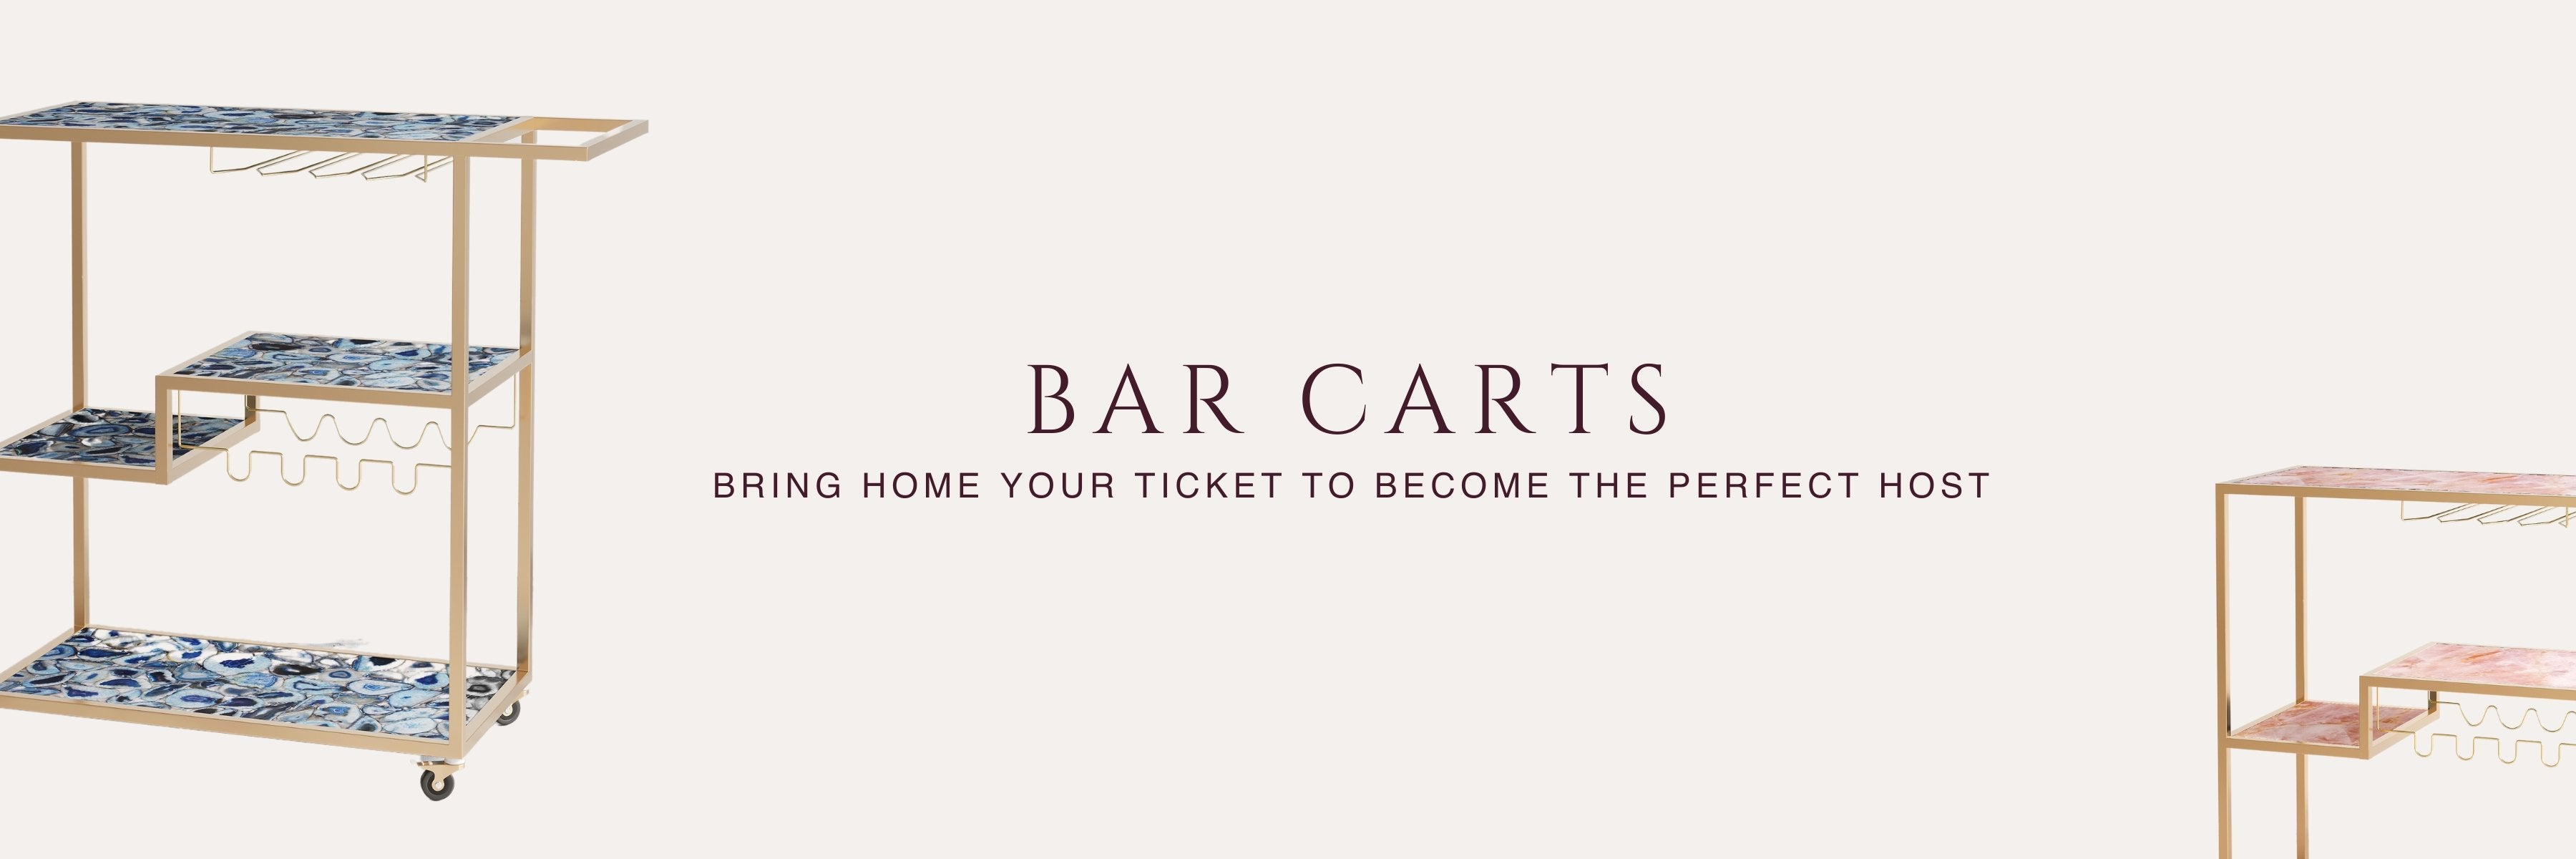 Bar Carts | HAUTE ARTE